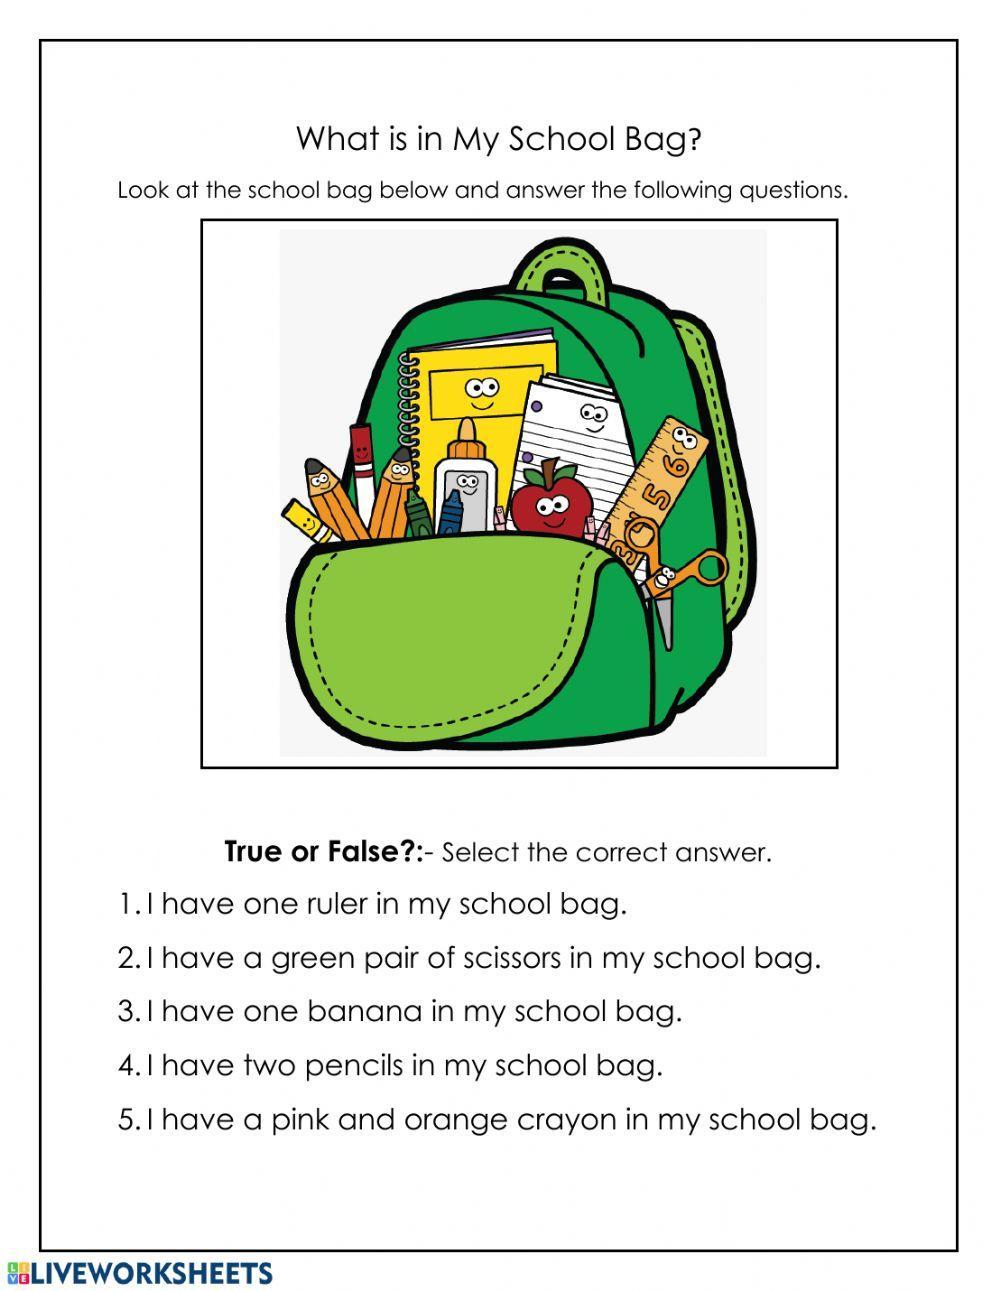 What is in My School Bag?